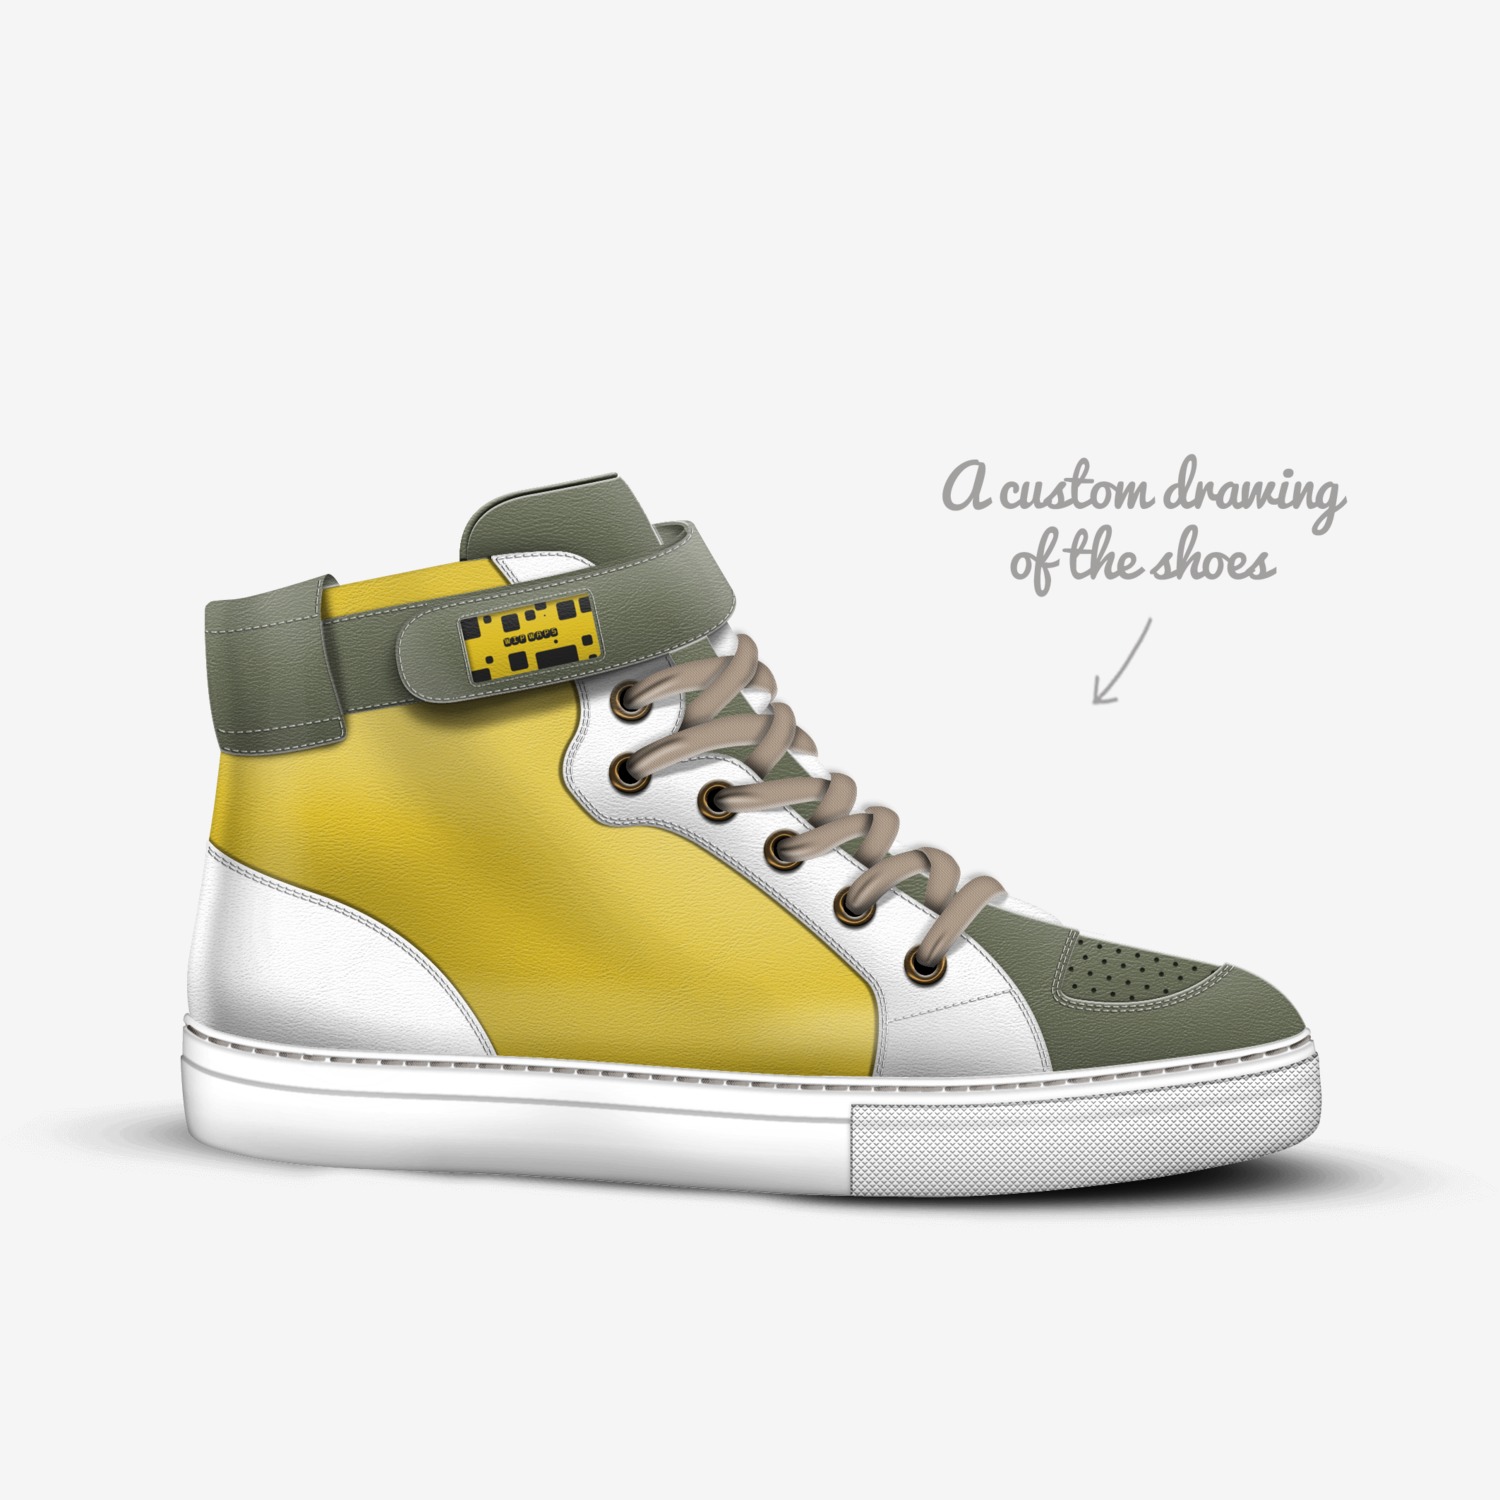 WIP WAPS | A Custom Shoe concept by Brandon Kyle